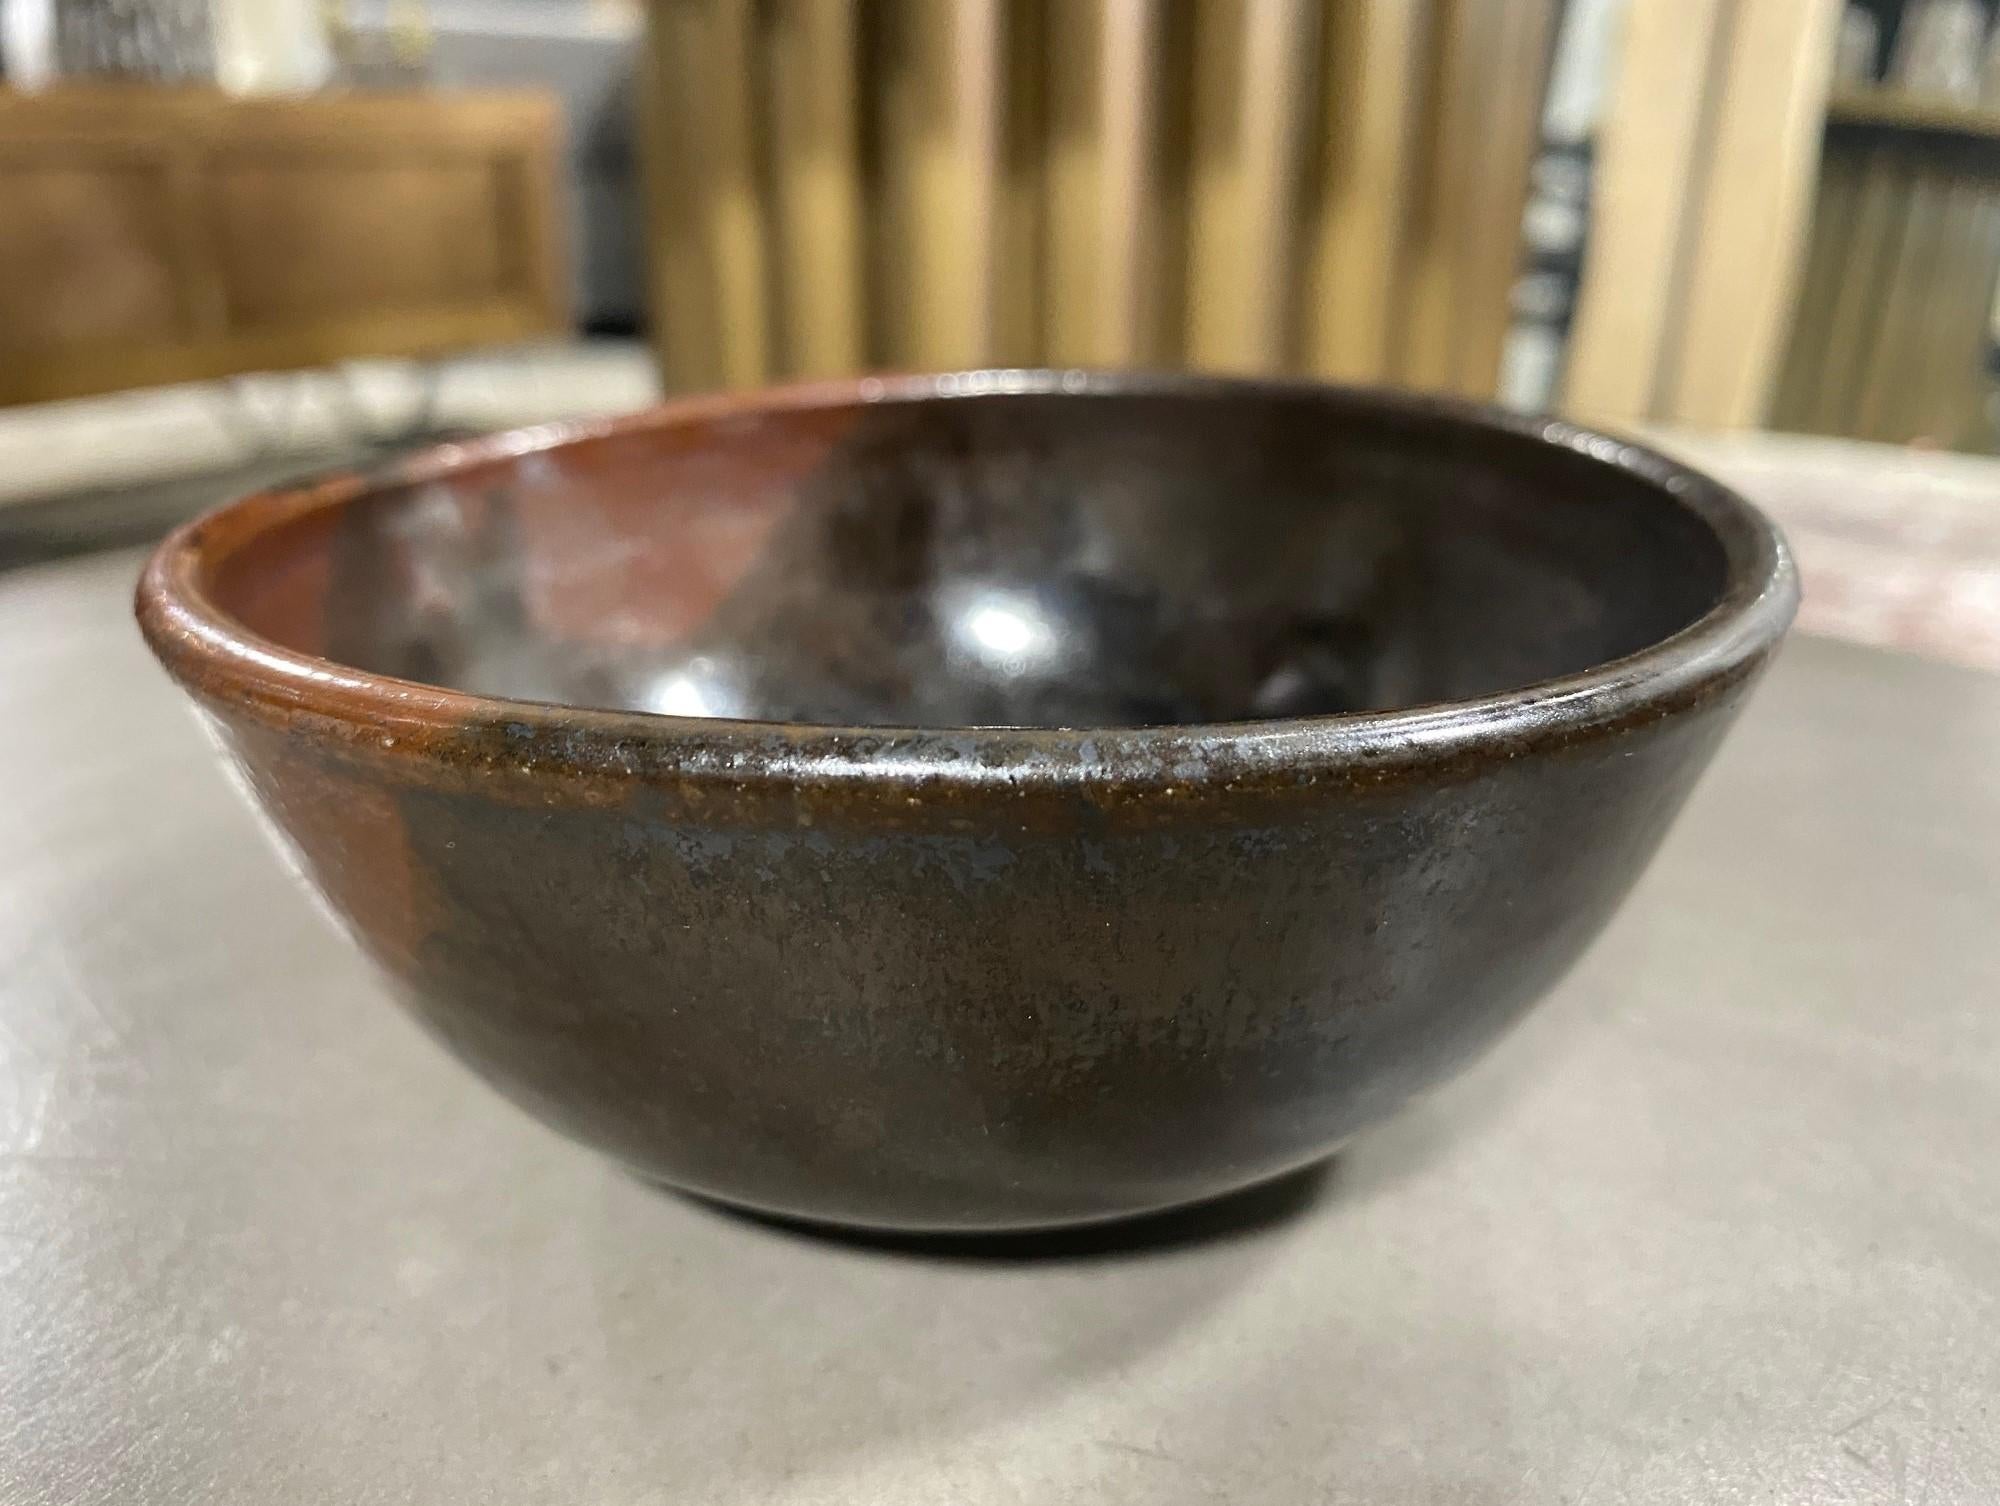 Earthenware Toshiko Takaezu Signed Mid-Century Modern Glazed Ceramic Pottery Chawan Tea Bowl